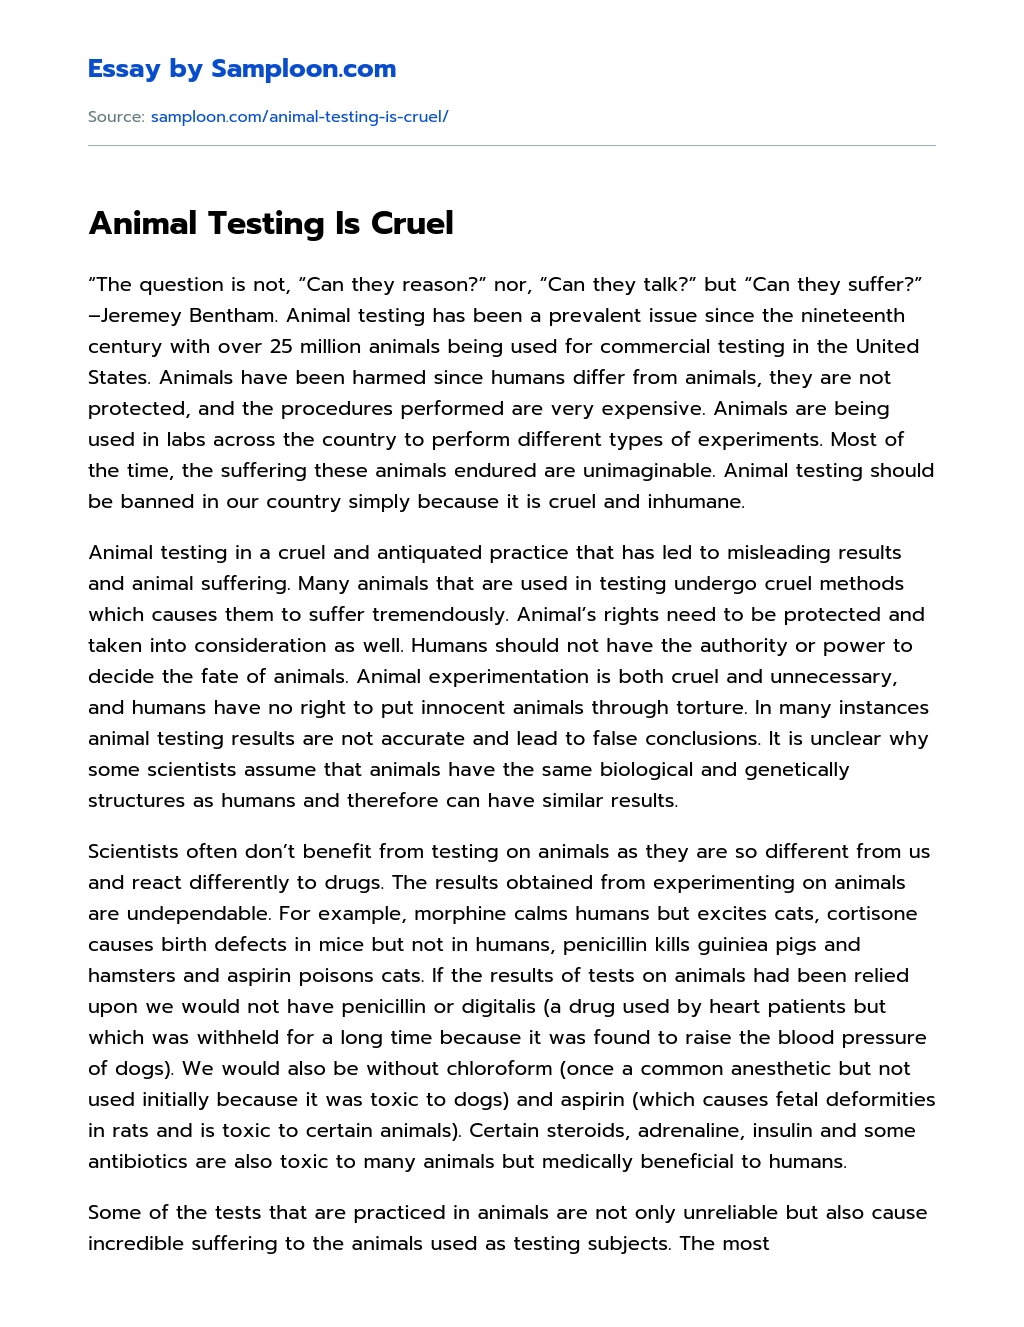 animal testing is bad essay